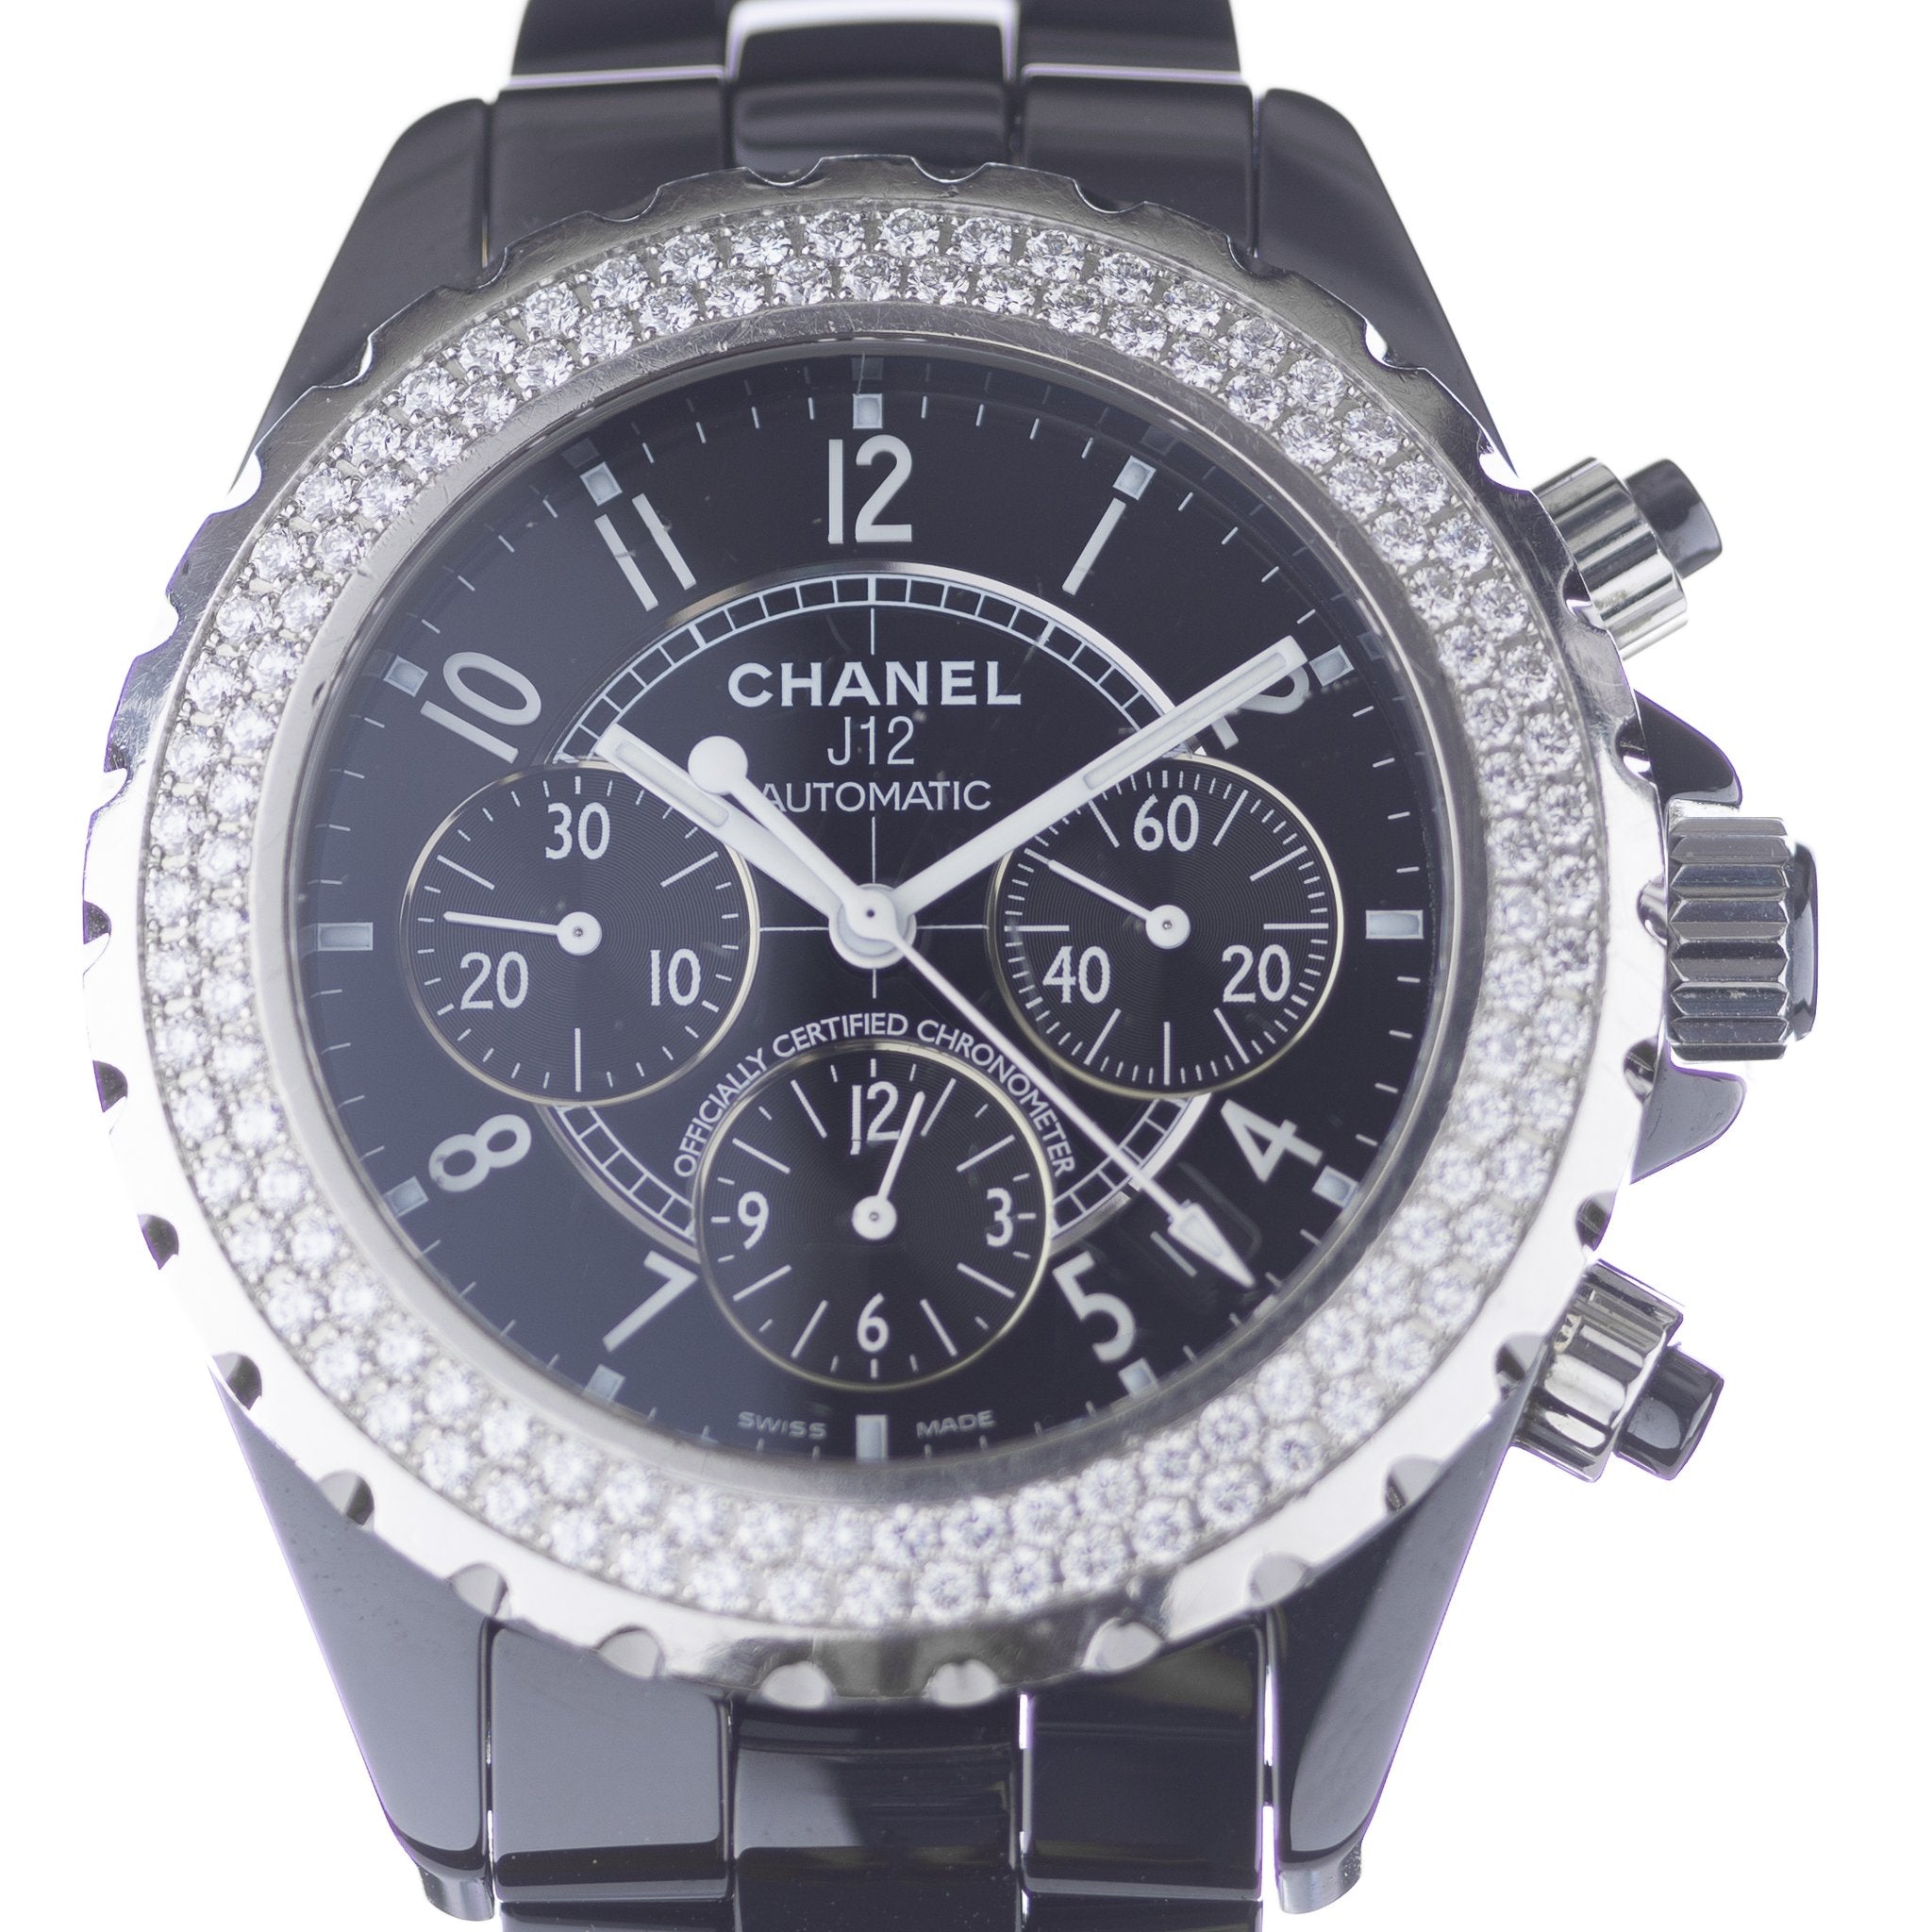 Søjle Hav markedsføring Chanel - J12 Officially Certified ChronoMeter Diamond Bezel – Every Watch  Has a Story